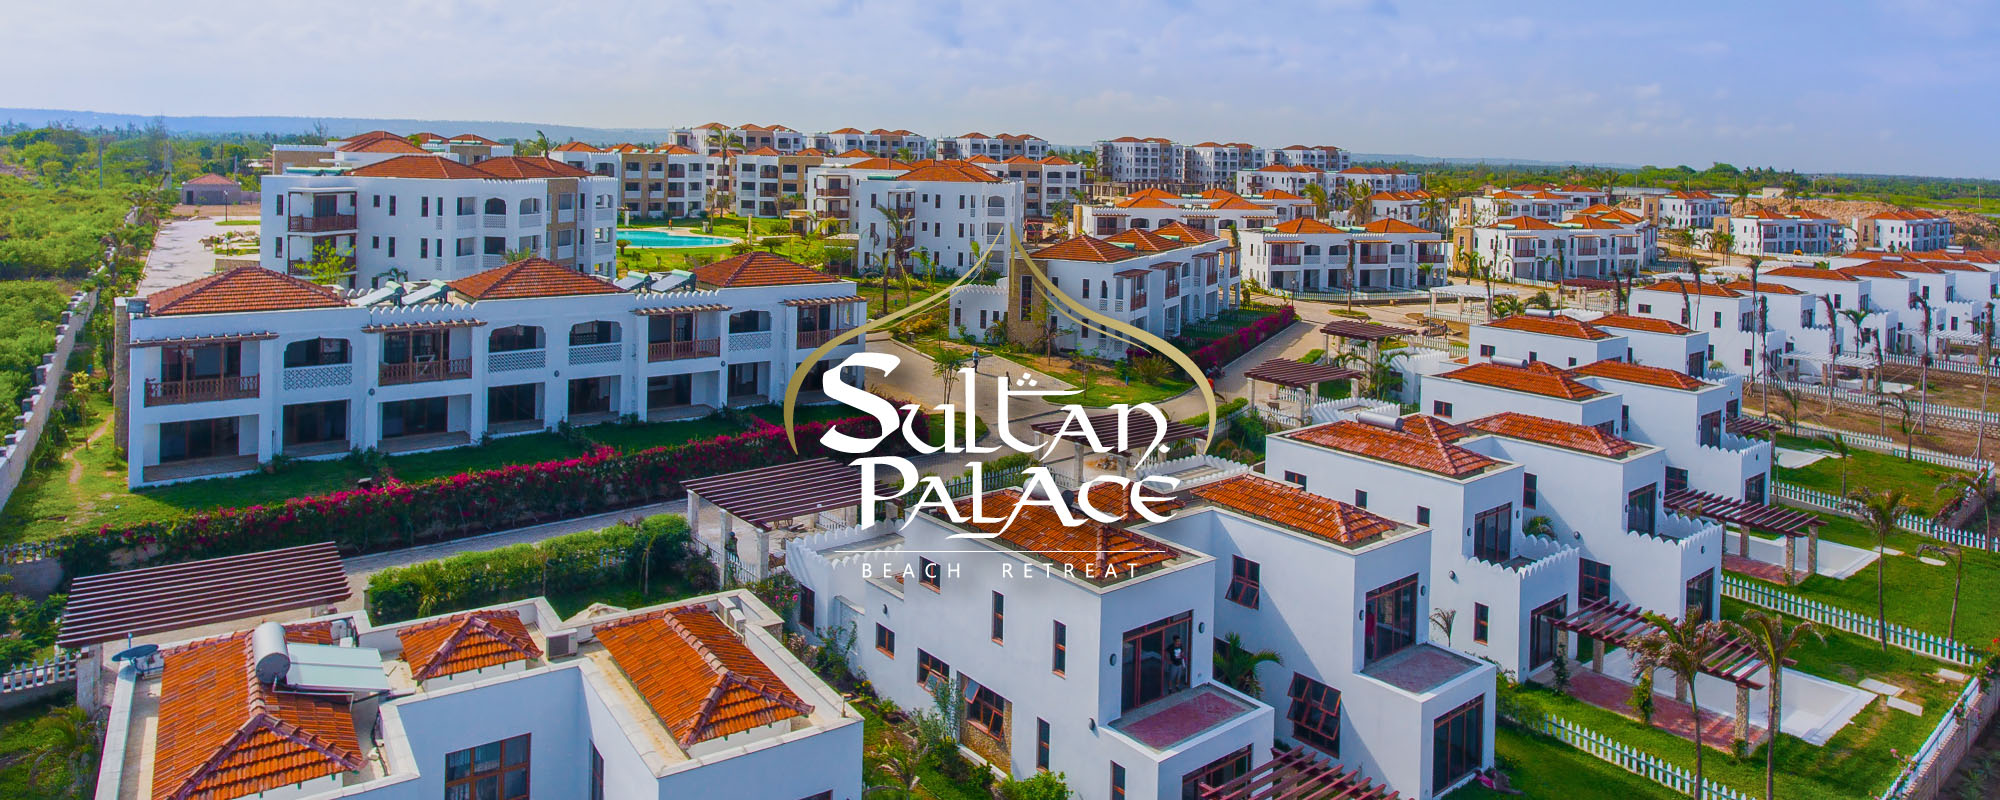 Sultan Palace Slide 1 Image